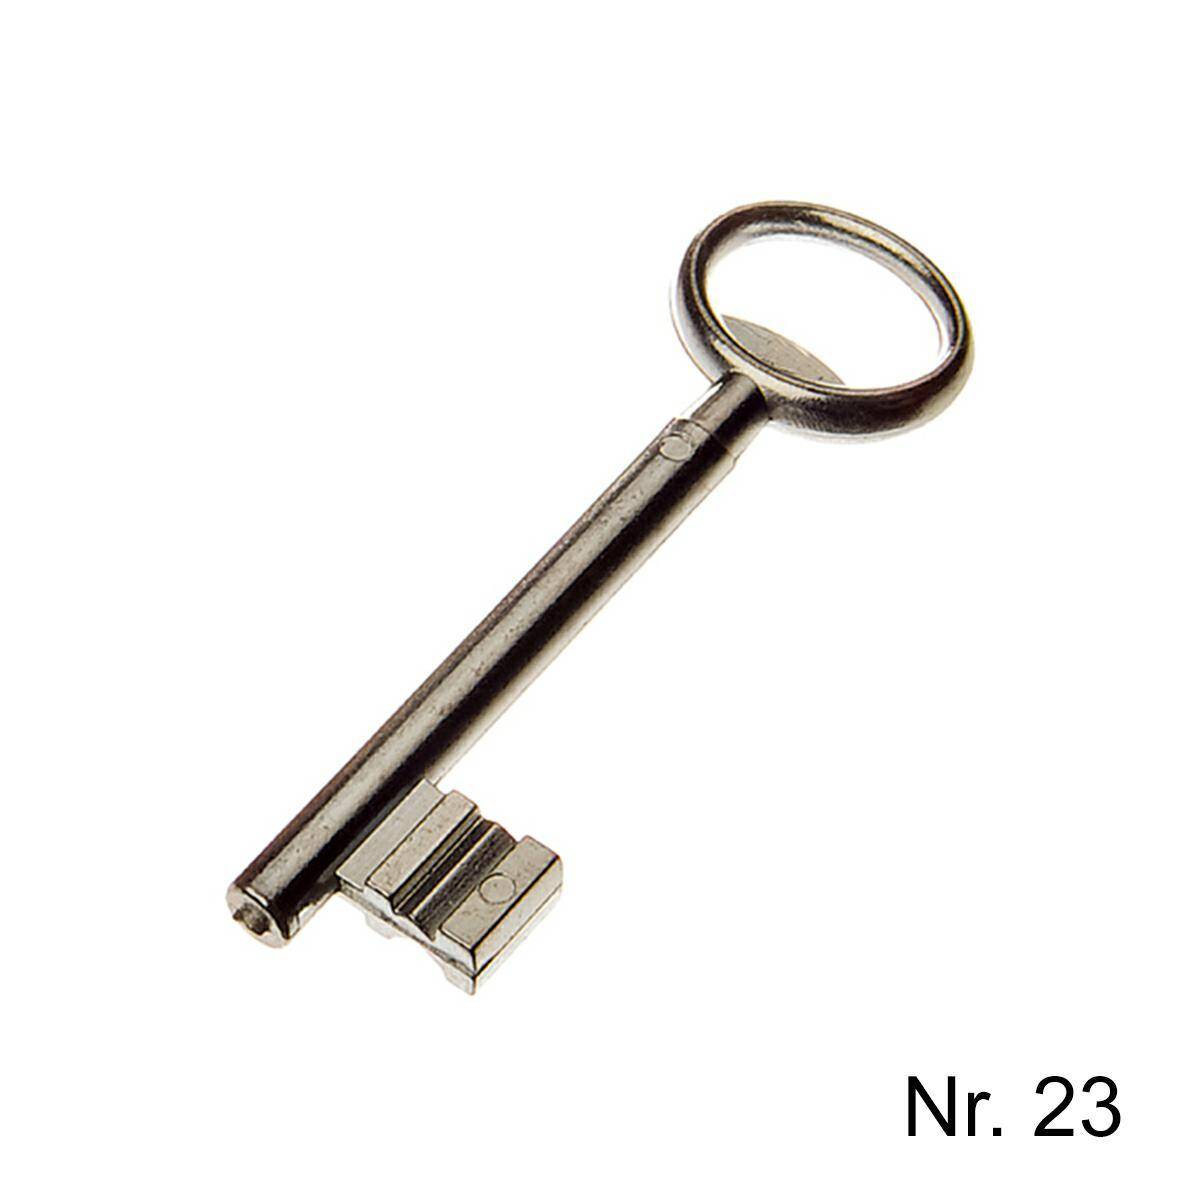 Cast key Jania for the lock - No. 23